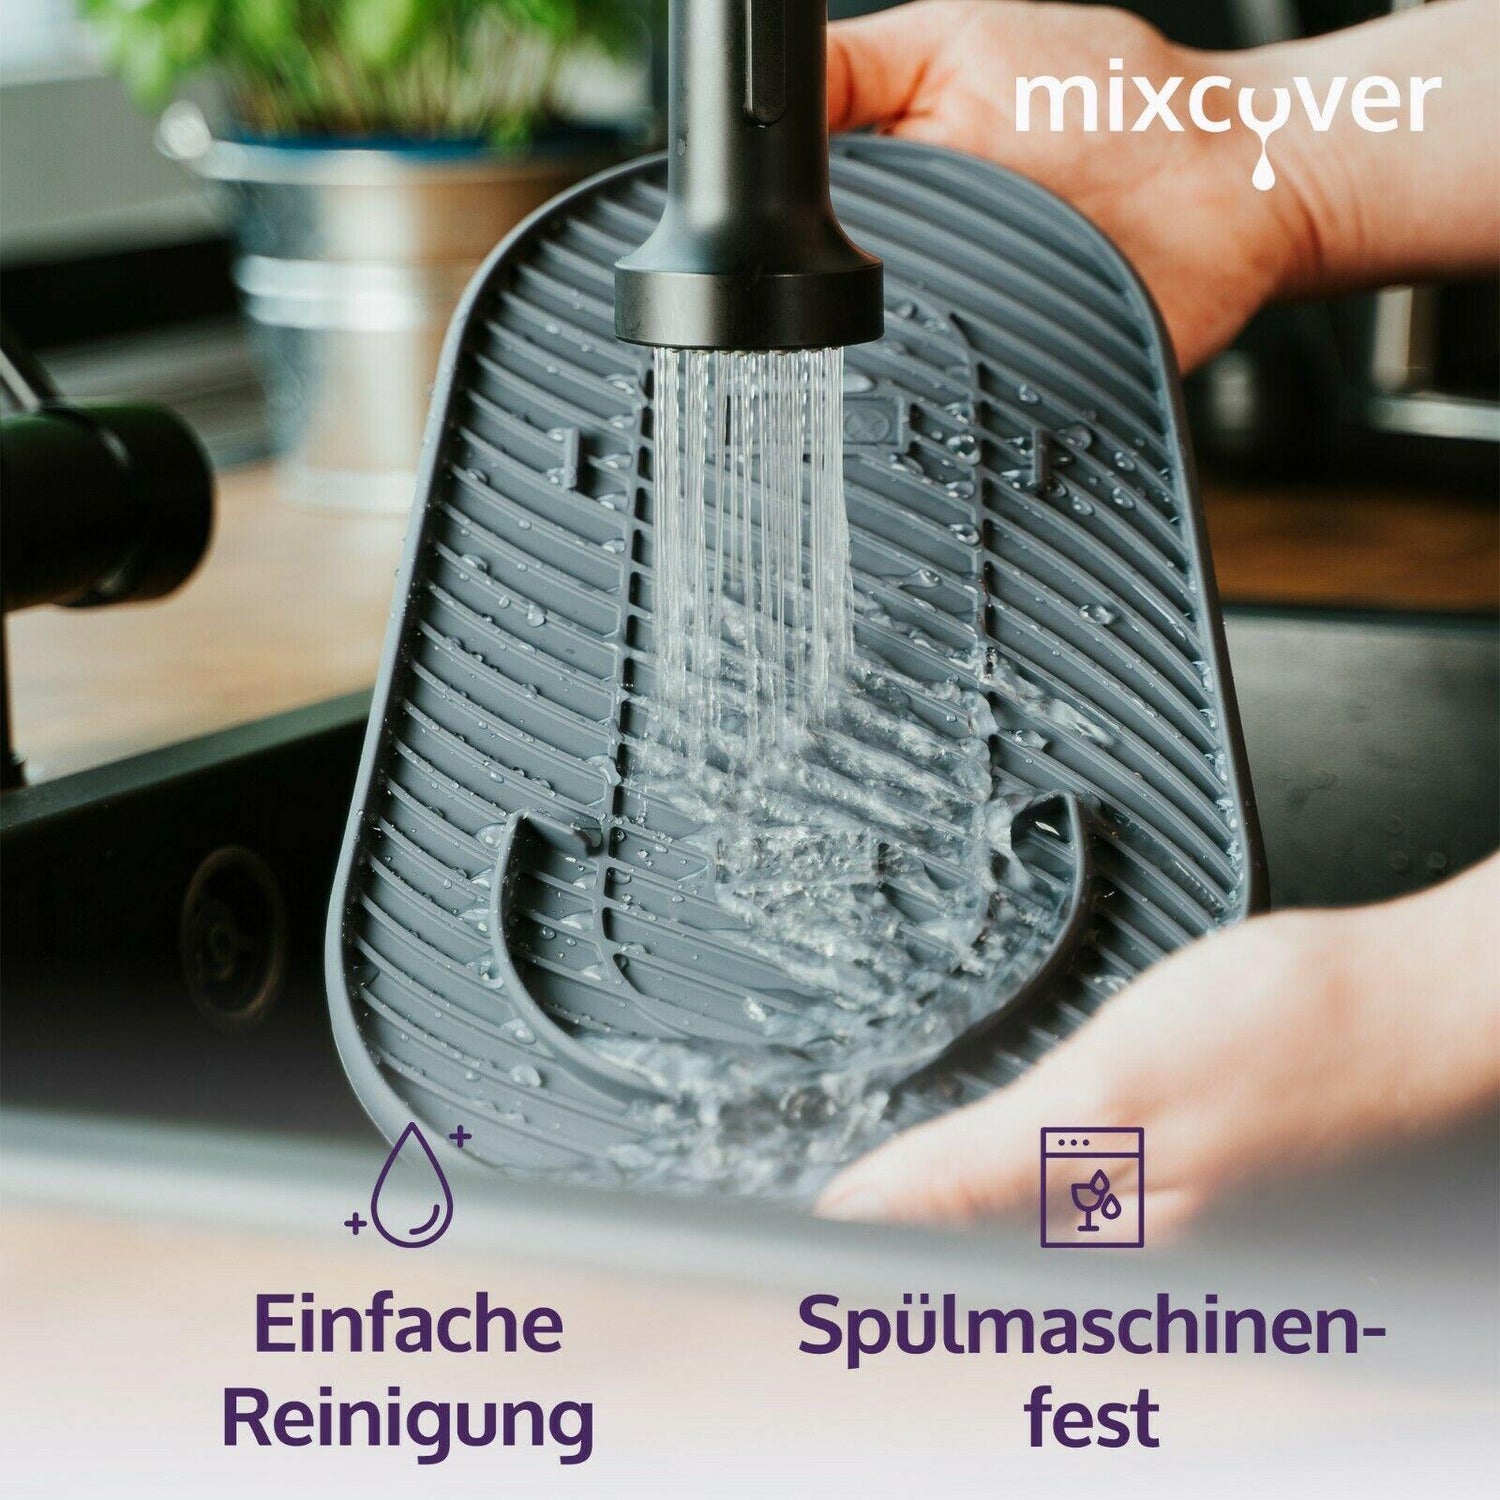 mixcover Silikonmatte, Abtropfmatte Grau kompatibel mit SodaStream Duo - Mixcover - Mixcover